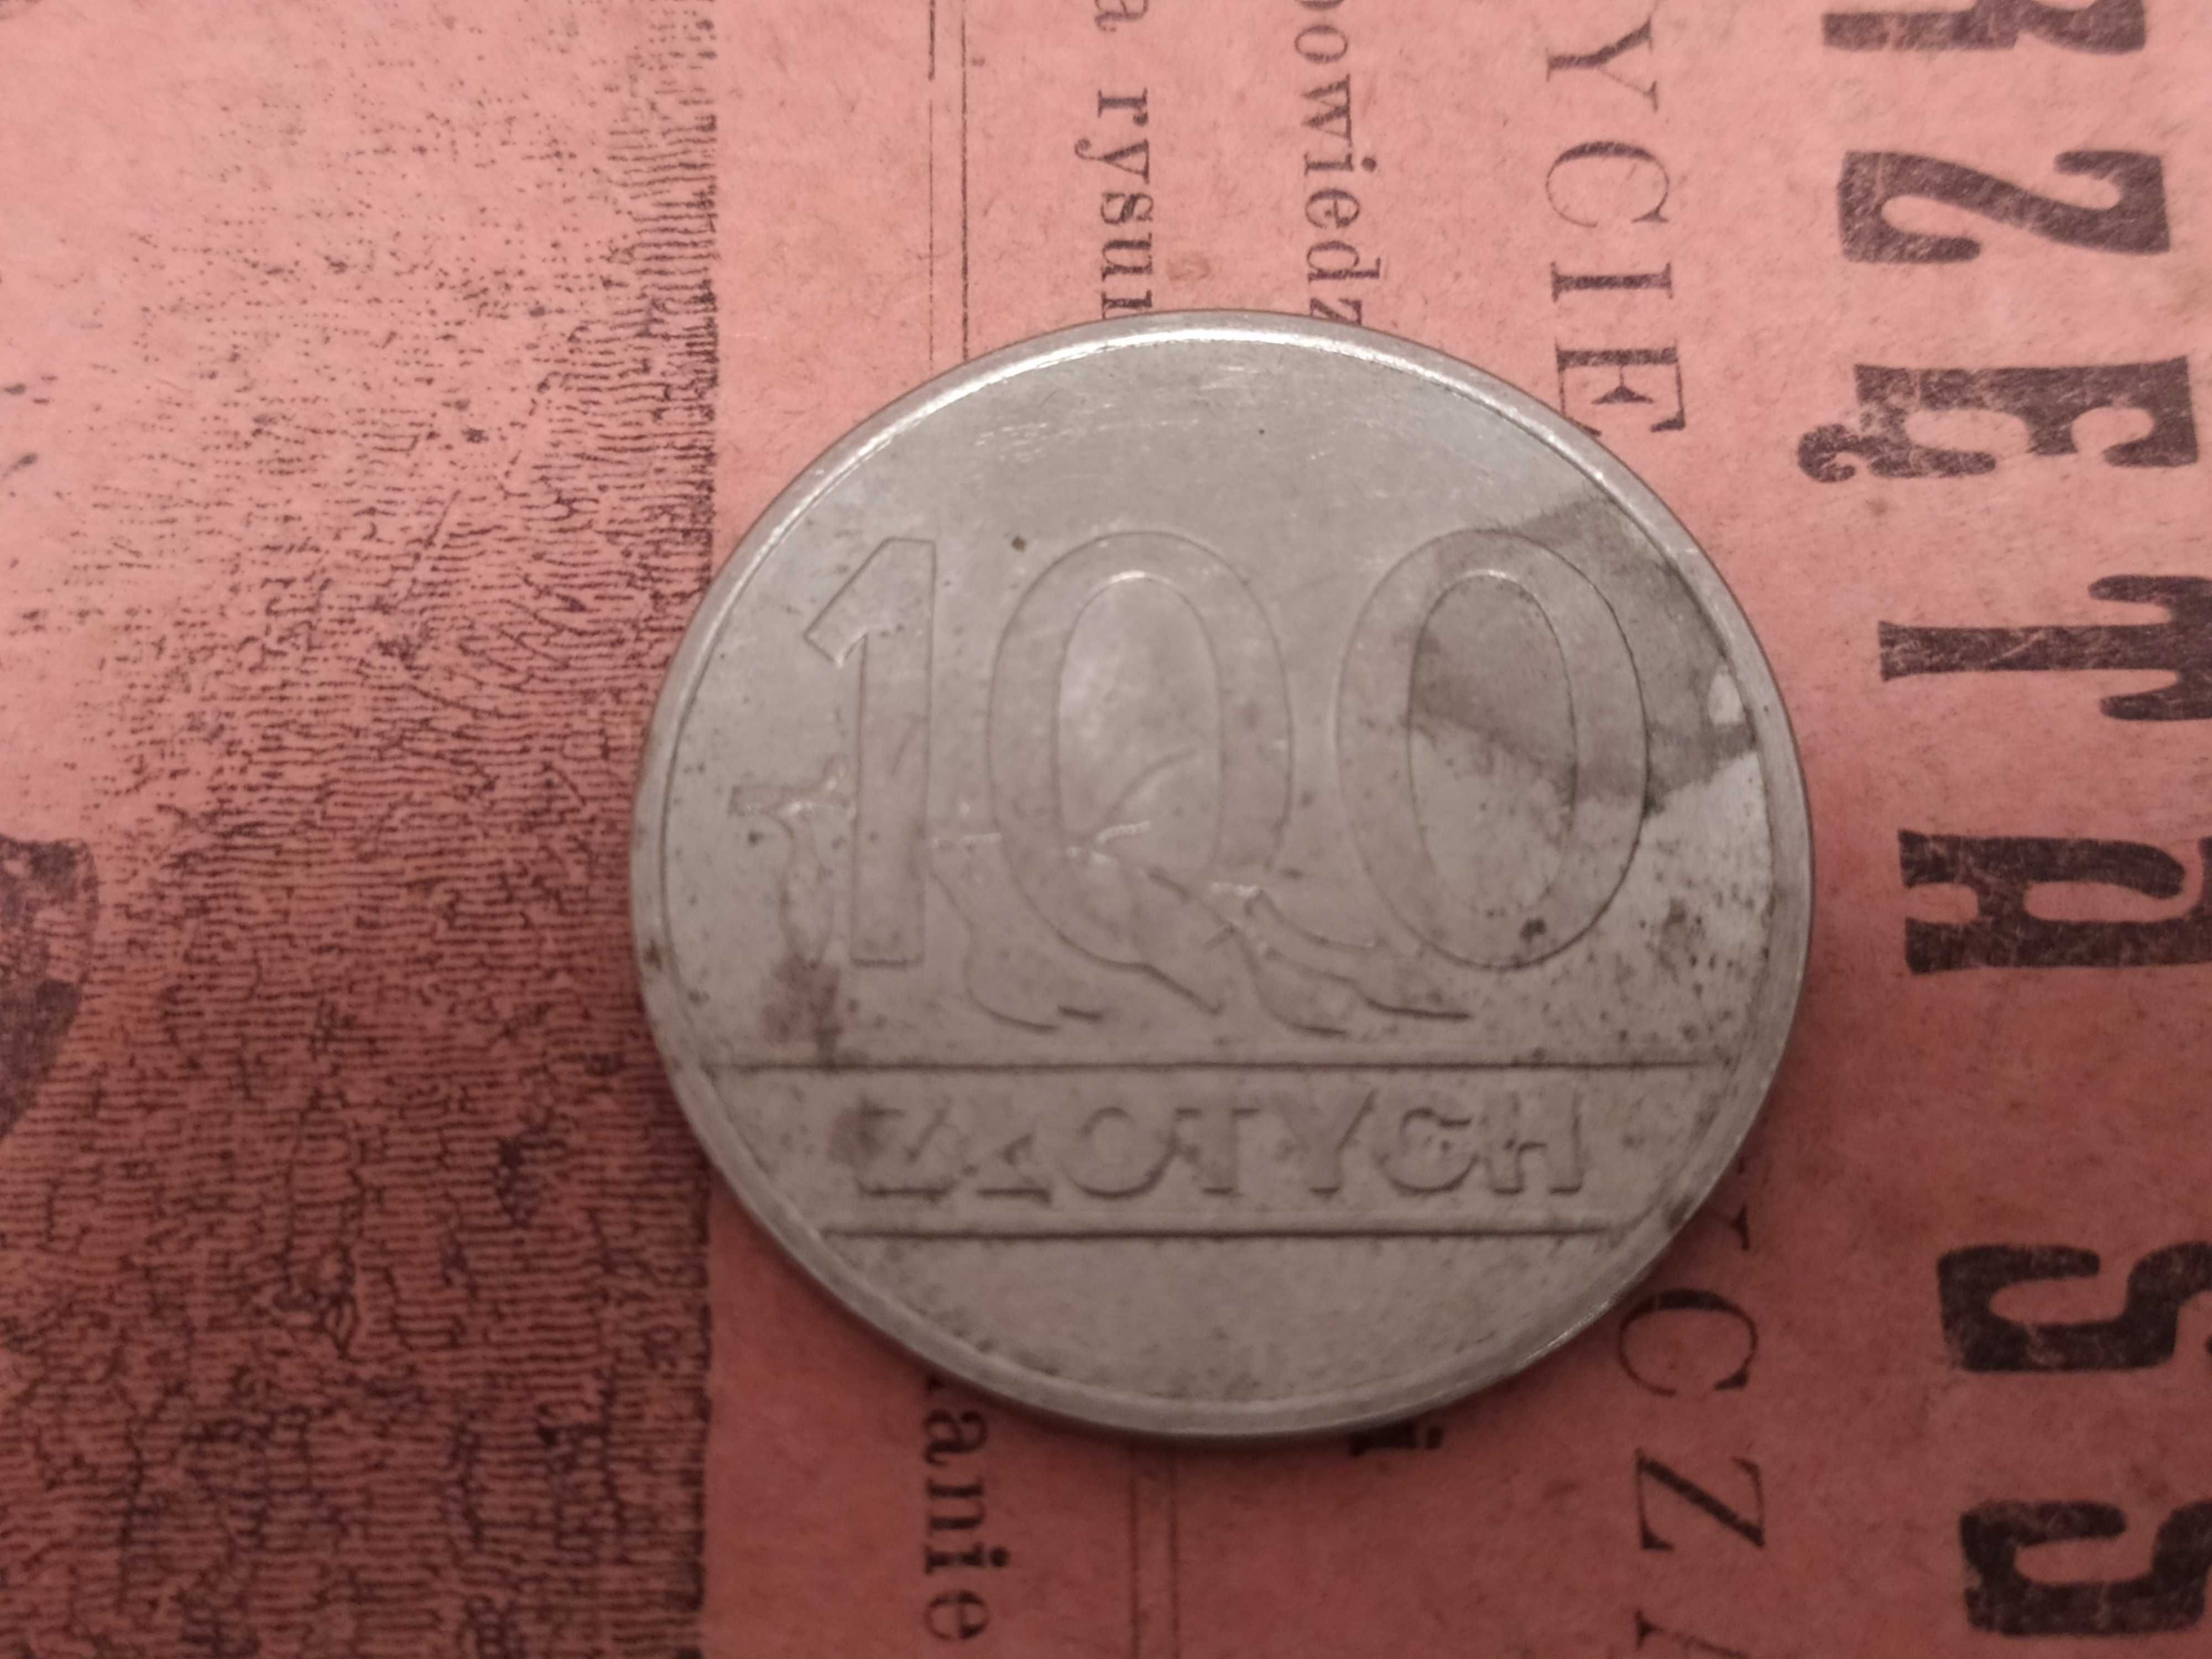 Monety 100 zł, lata 80